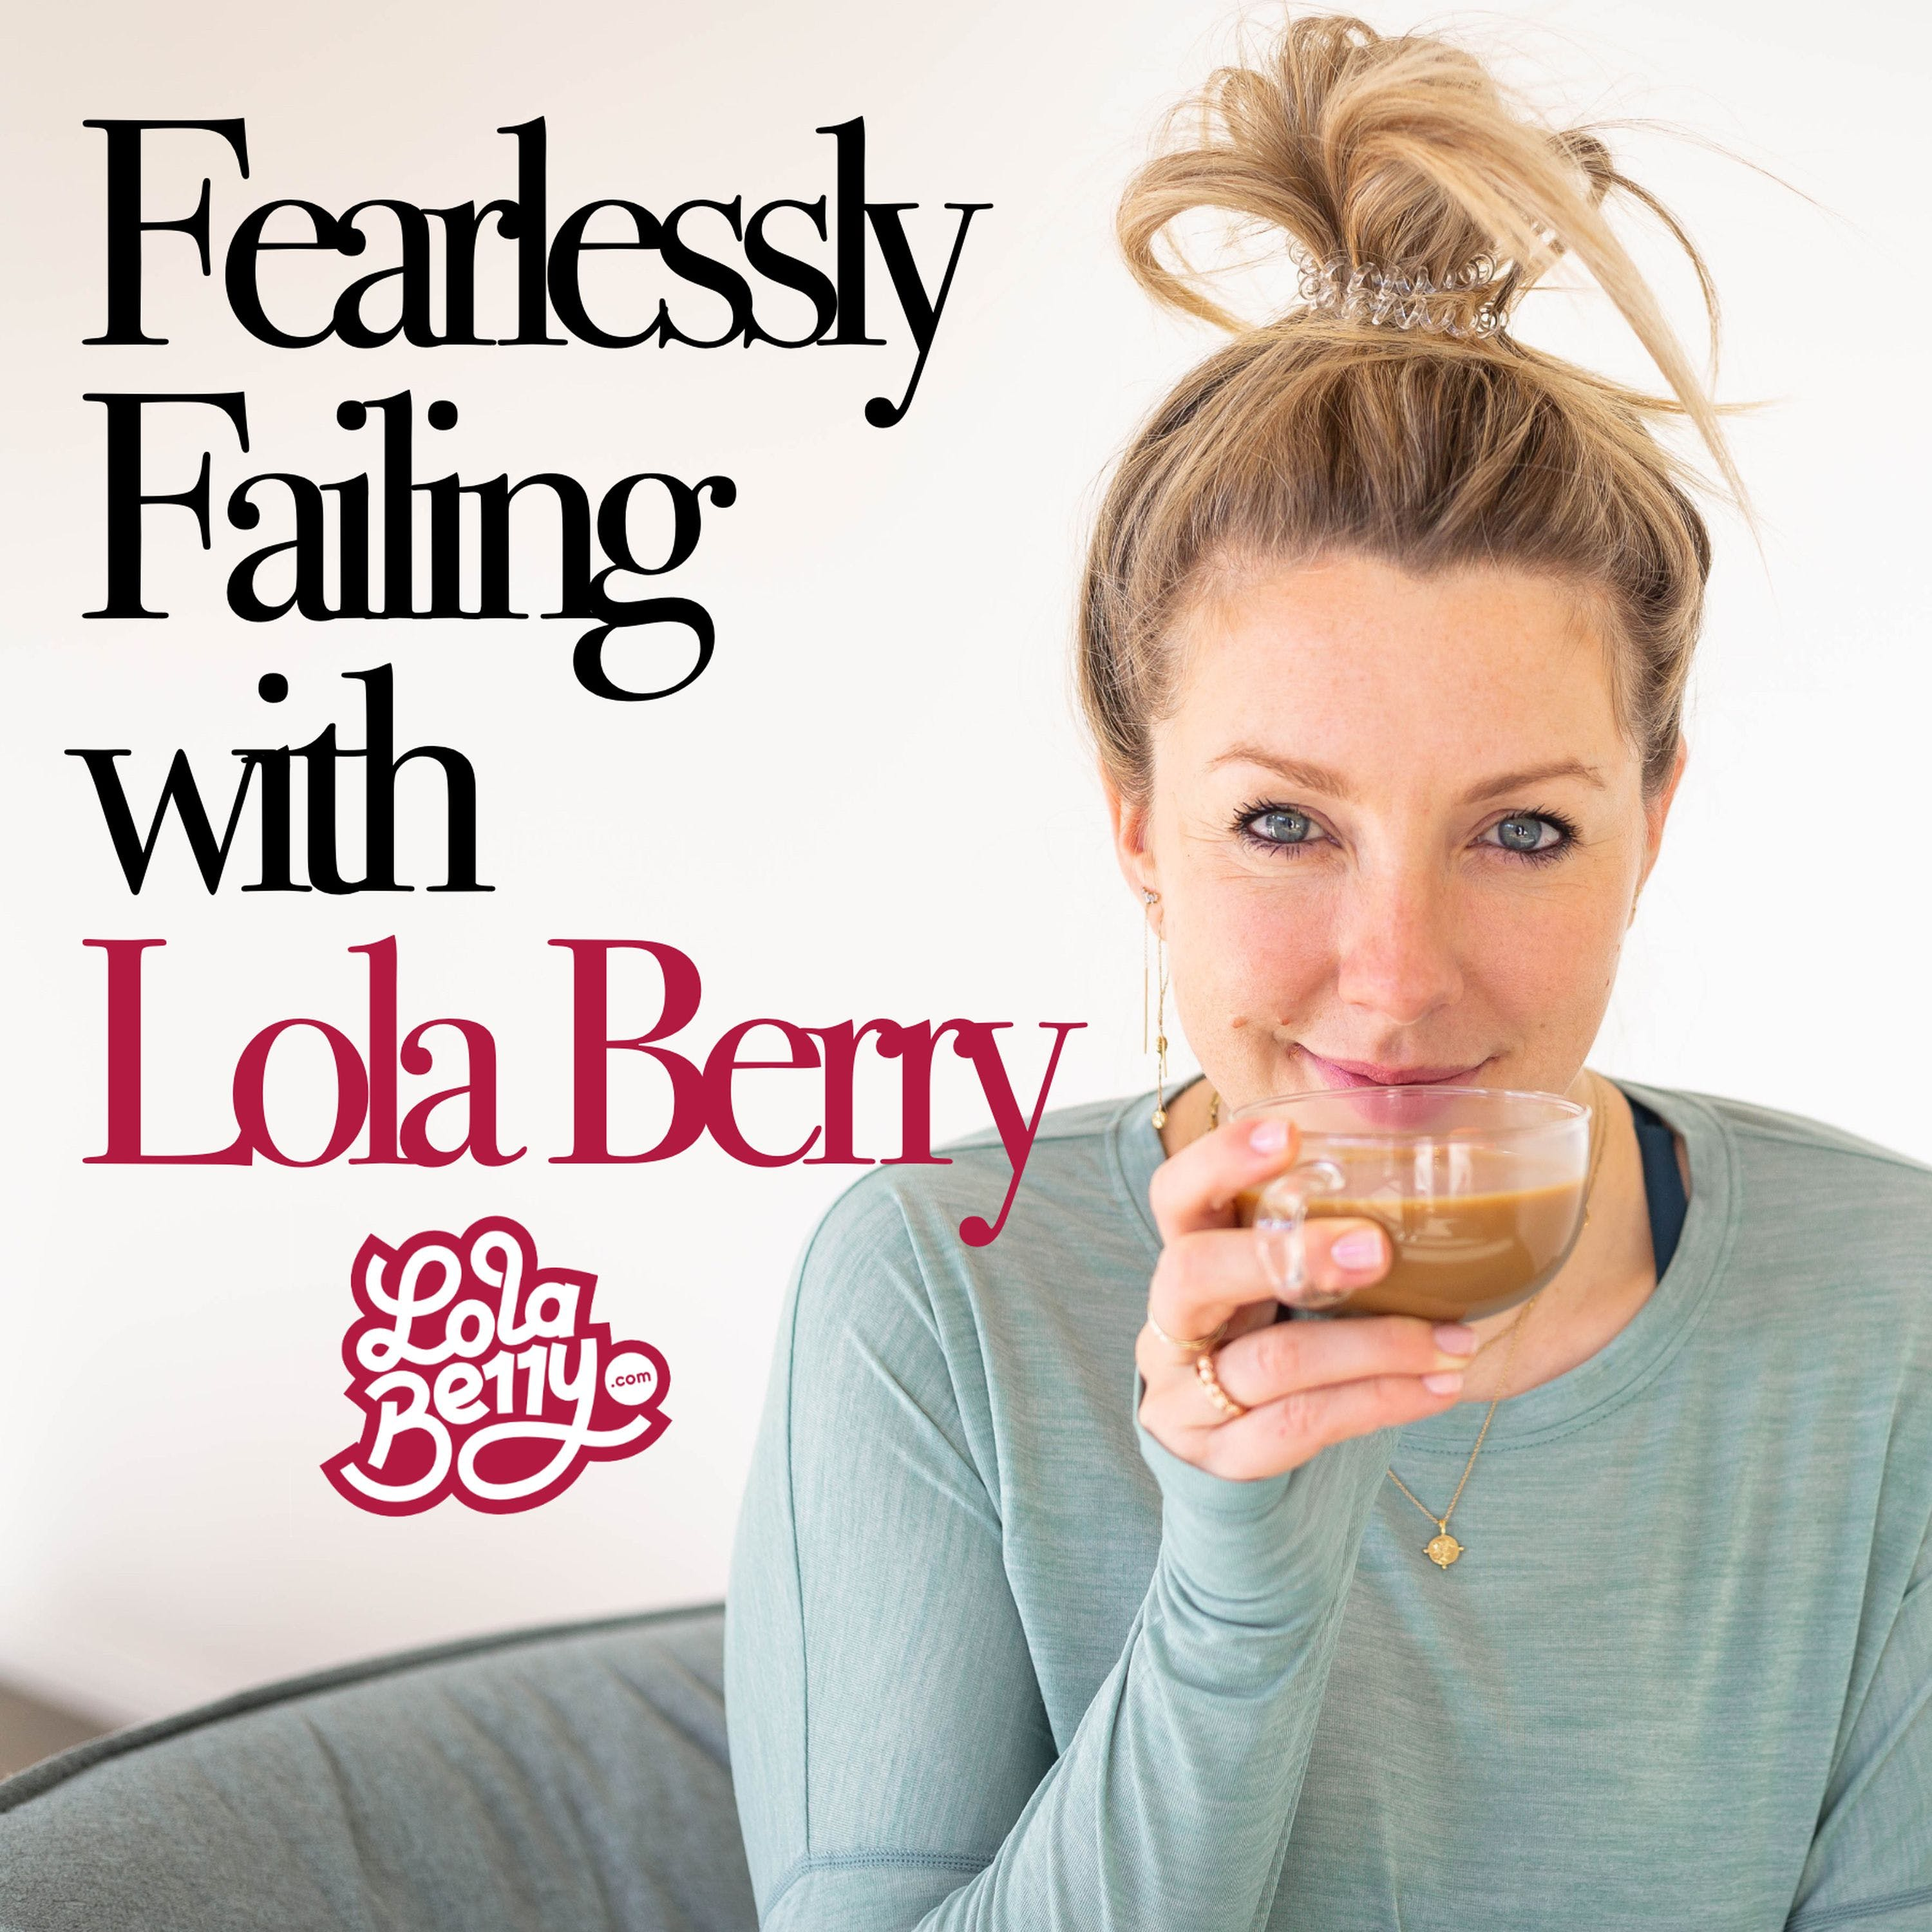 17. Fearlessly Failing: Sarah Di Iorio